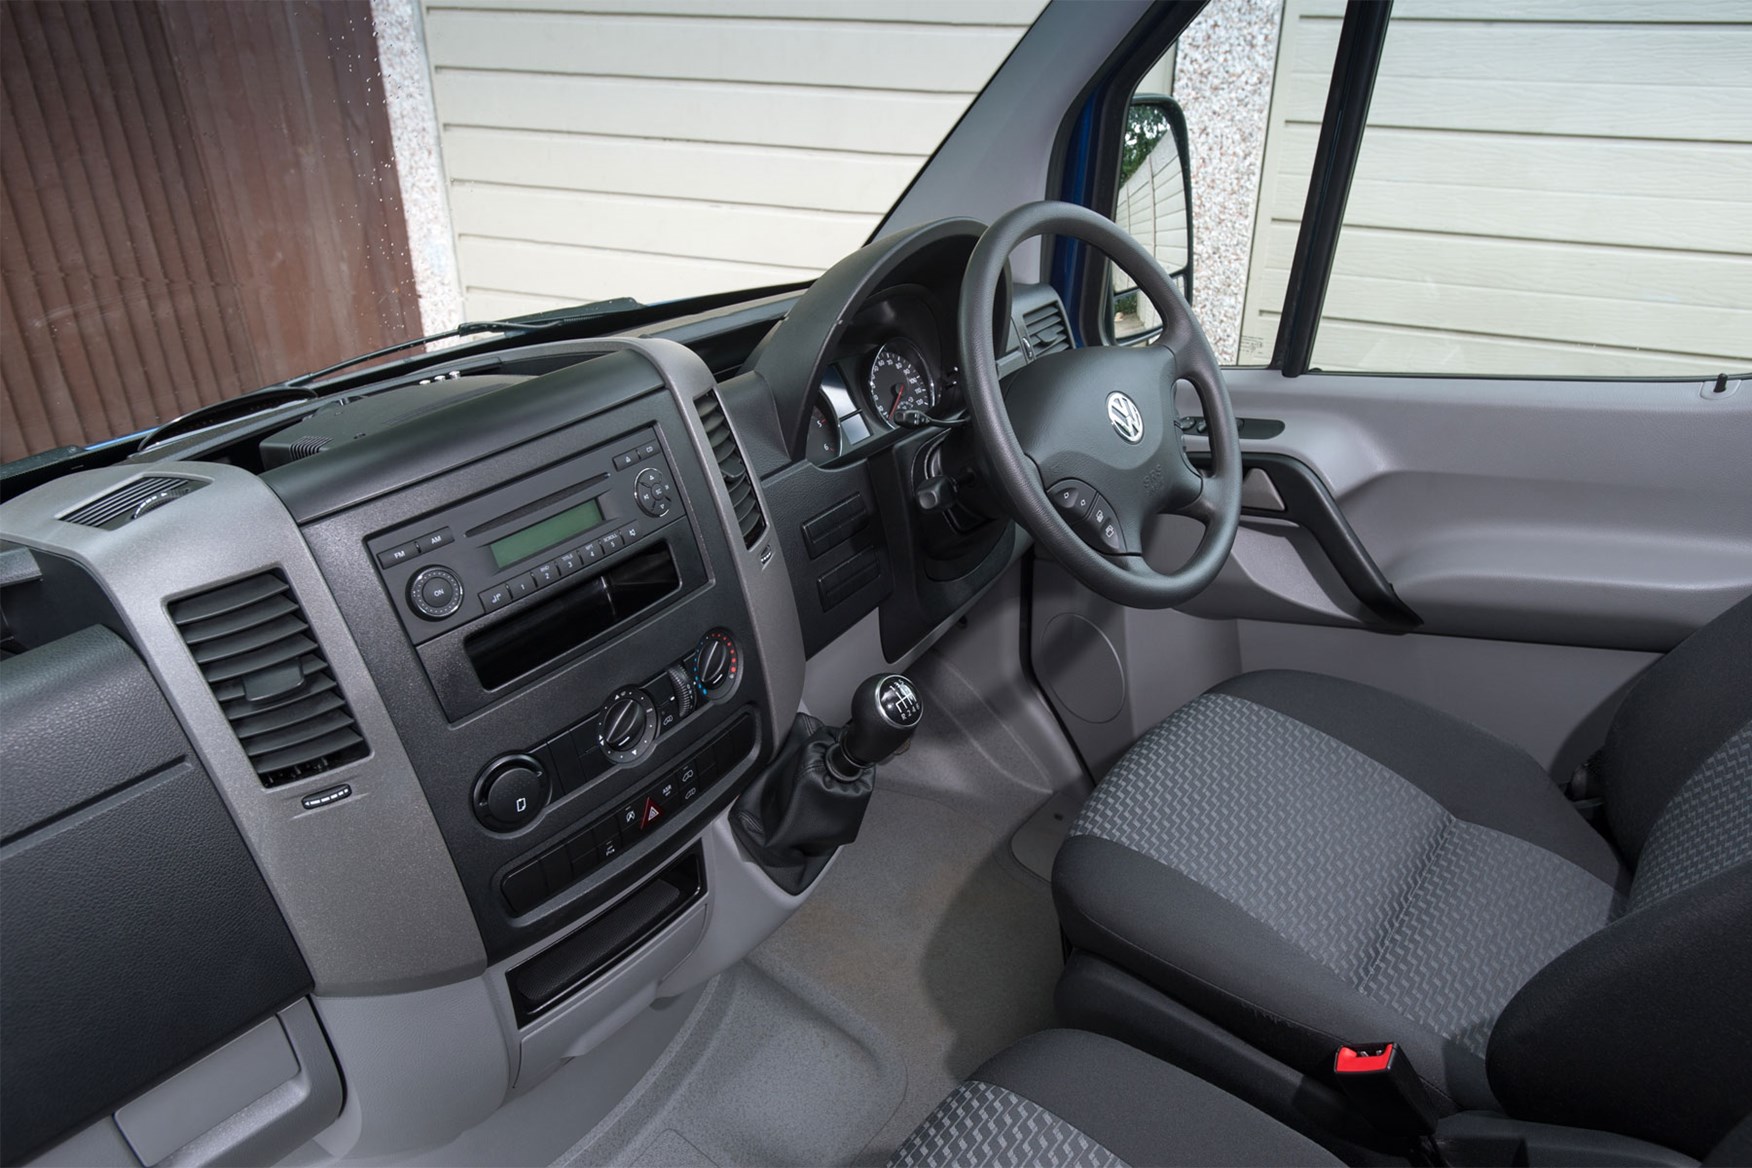 VW Crafter (2011-2016) cab interior